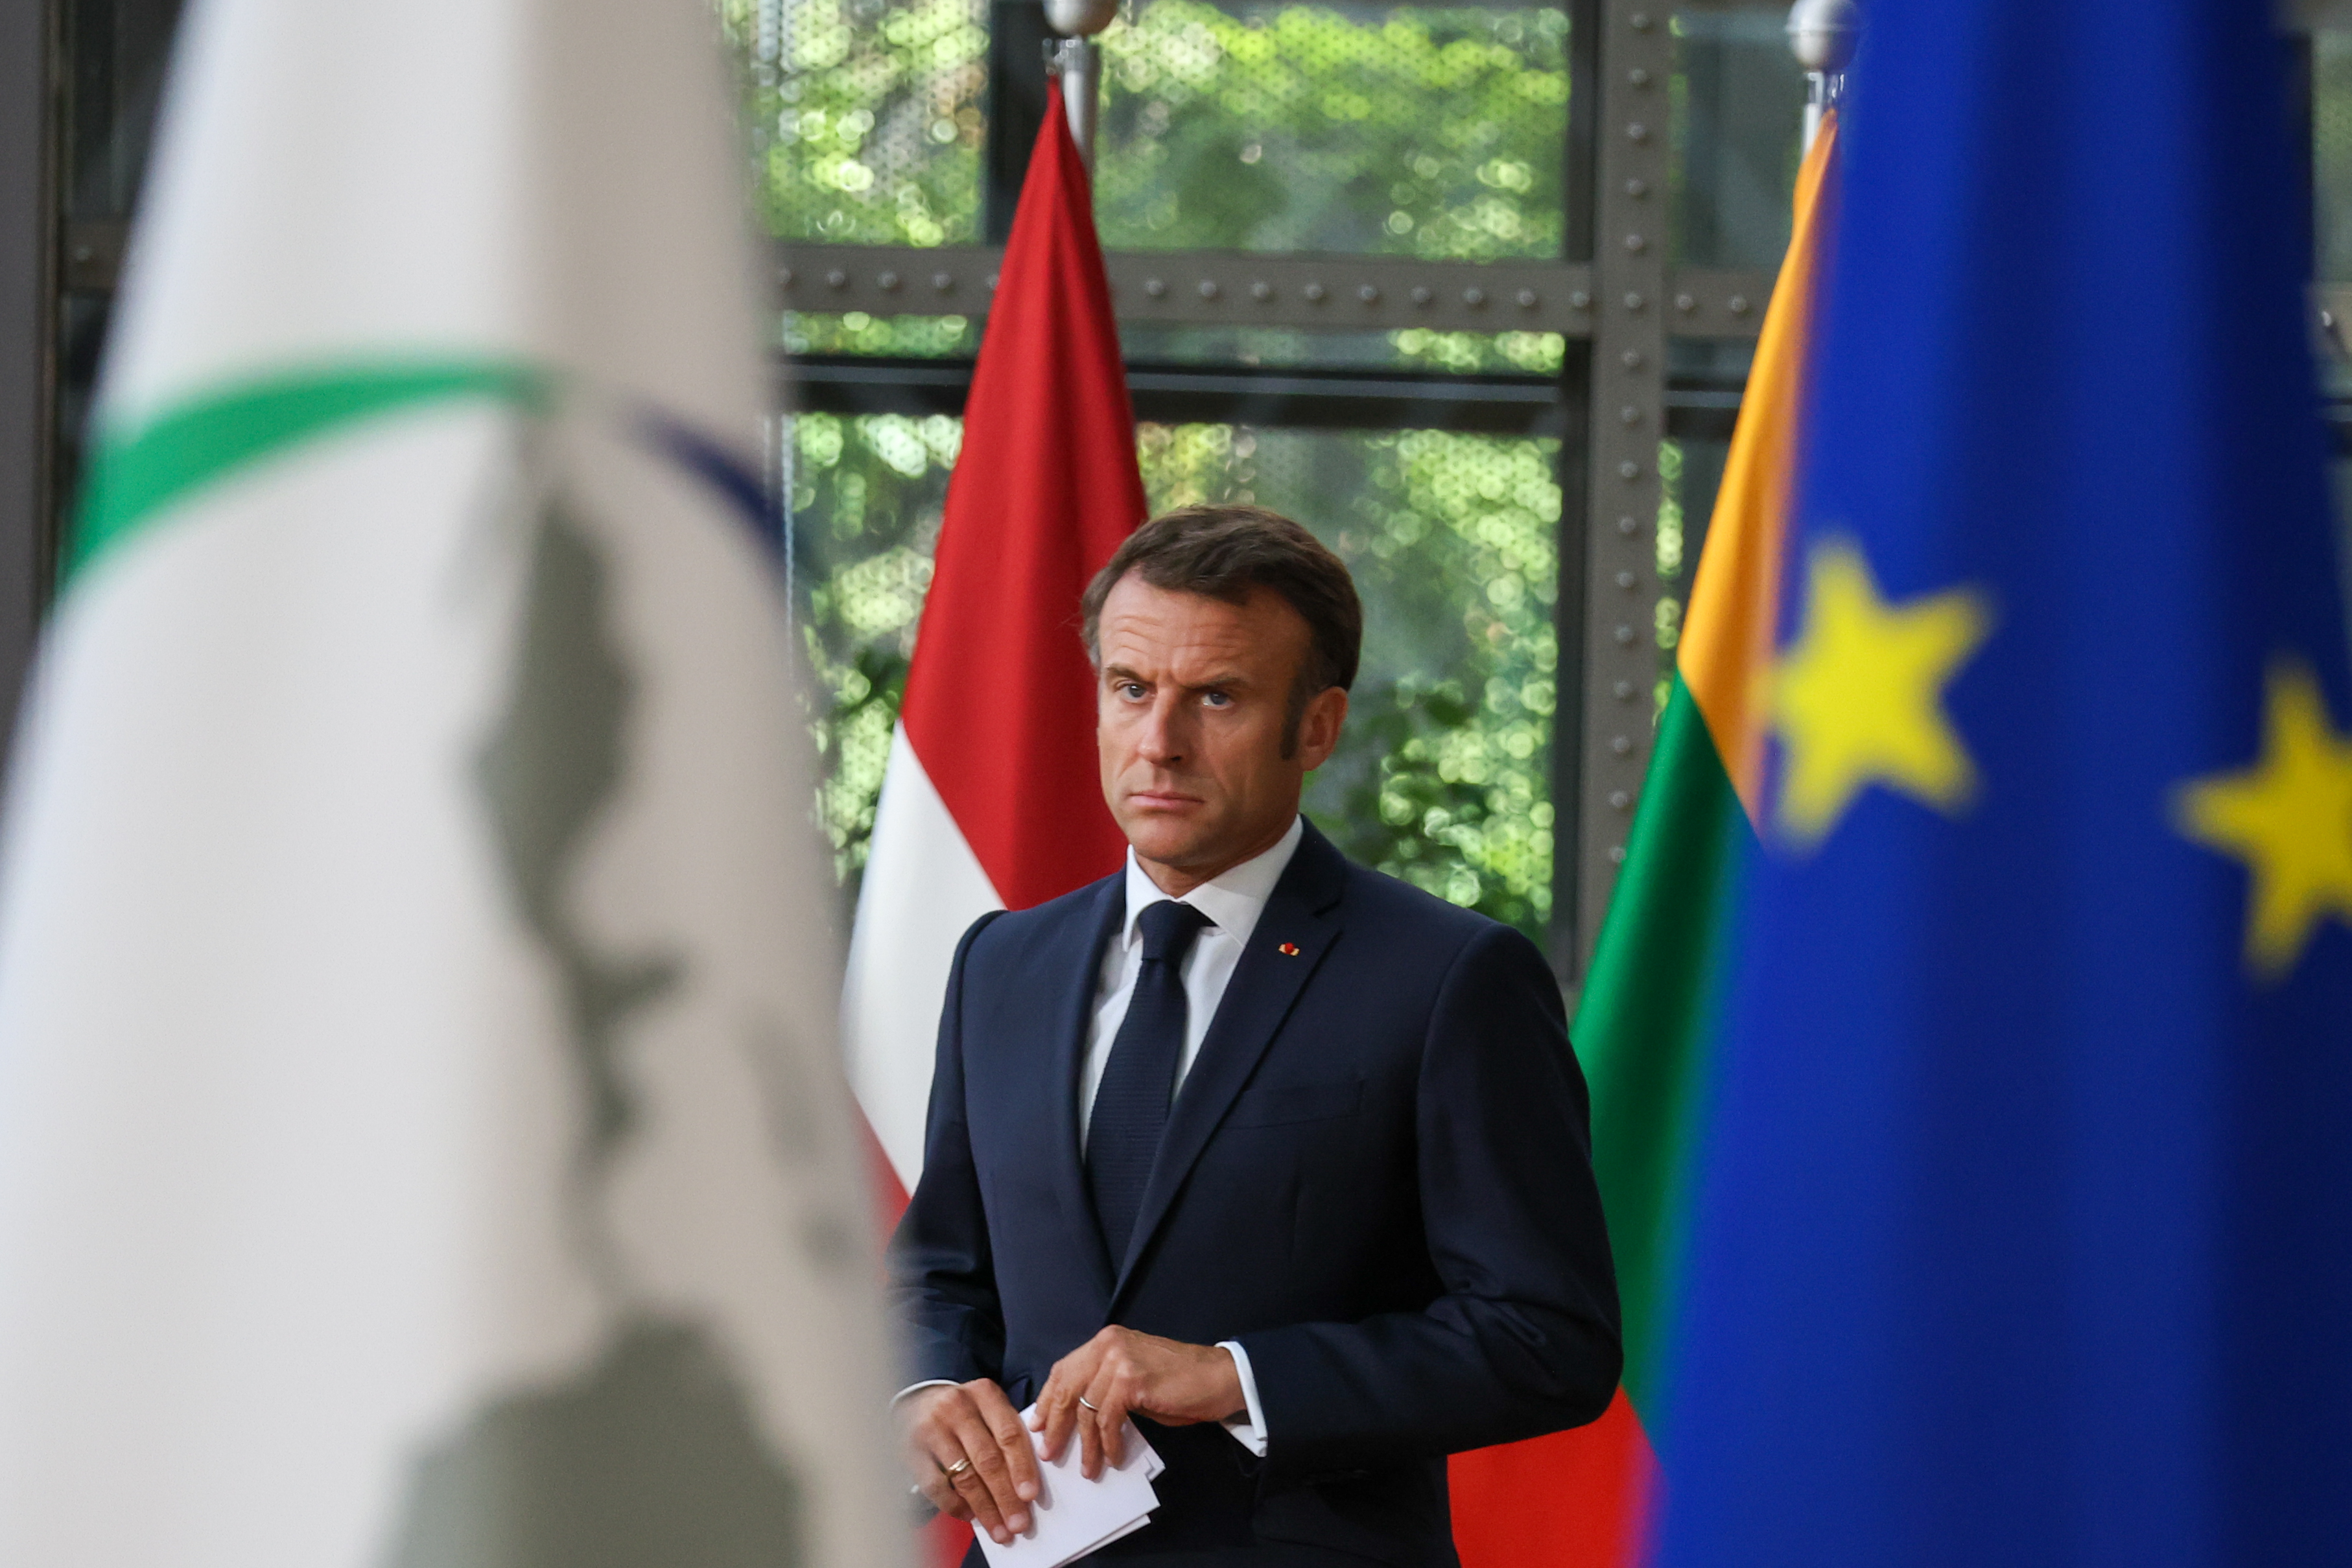 EU-China-Macron-Concerns